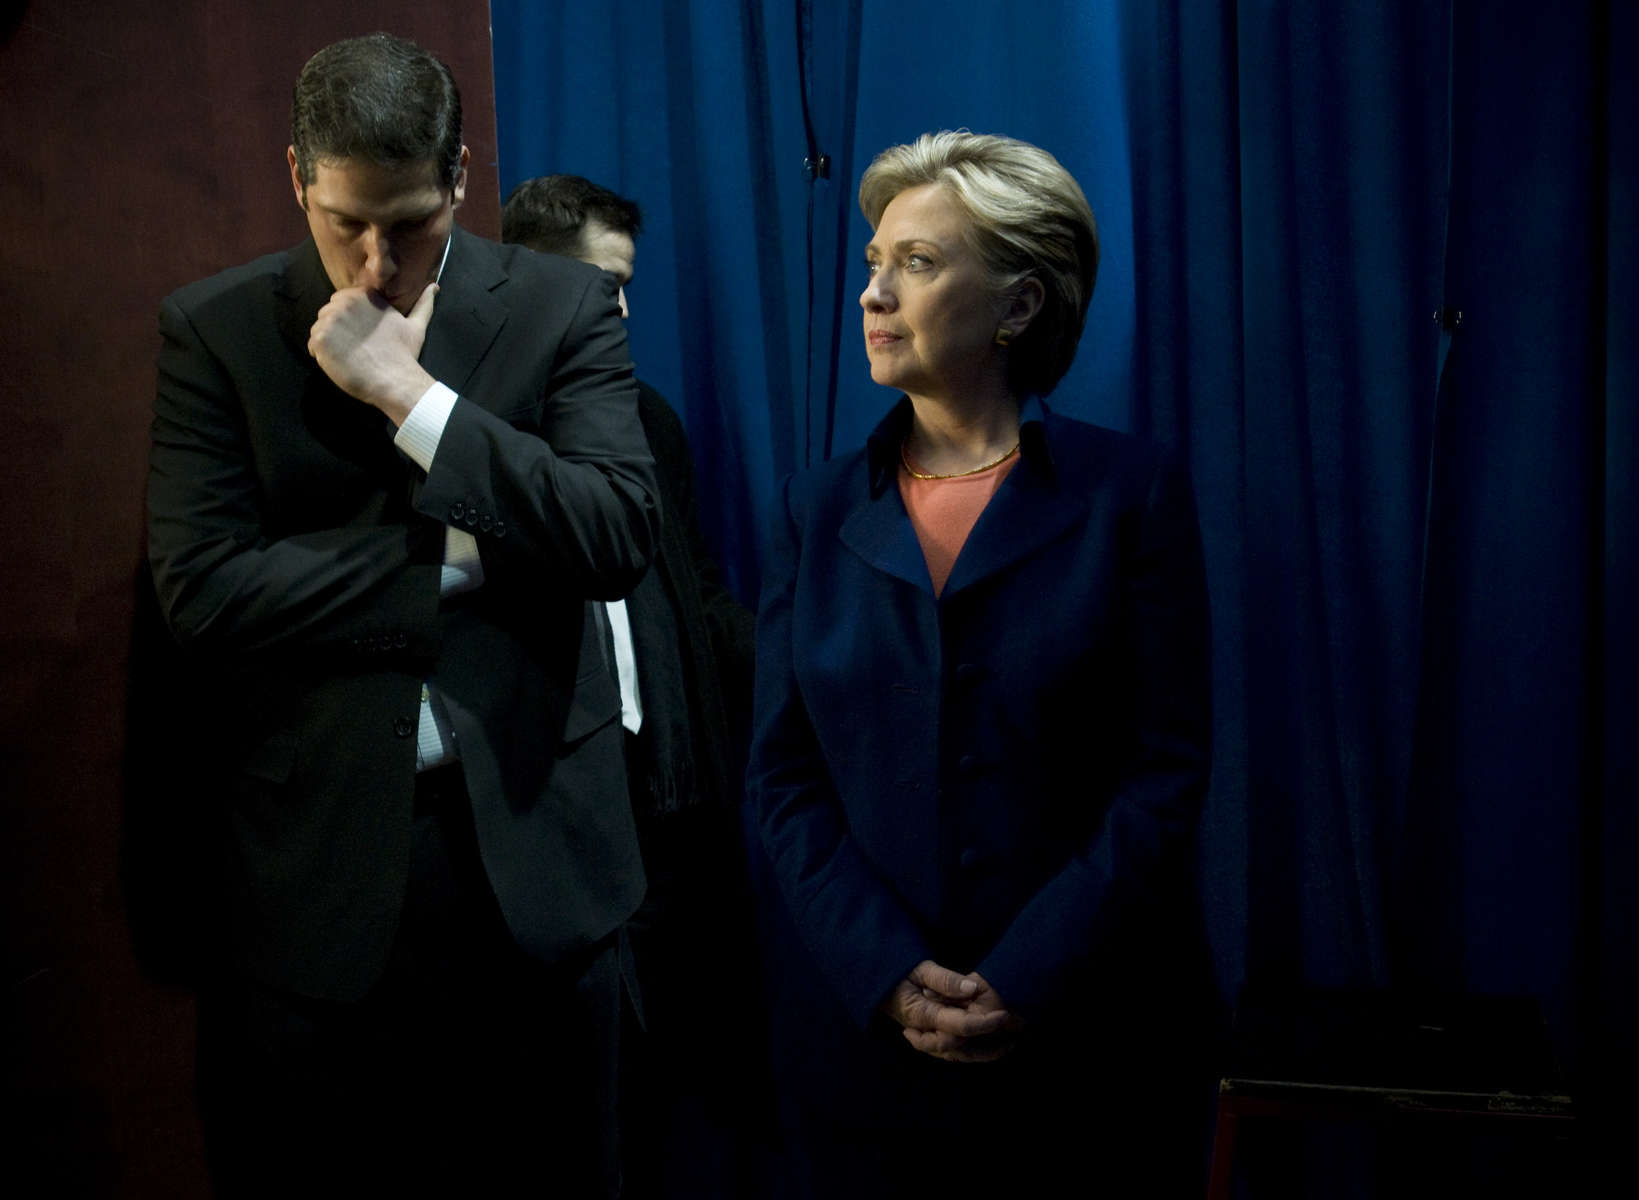 Hillary 2008 Campaign